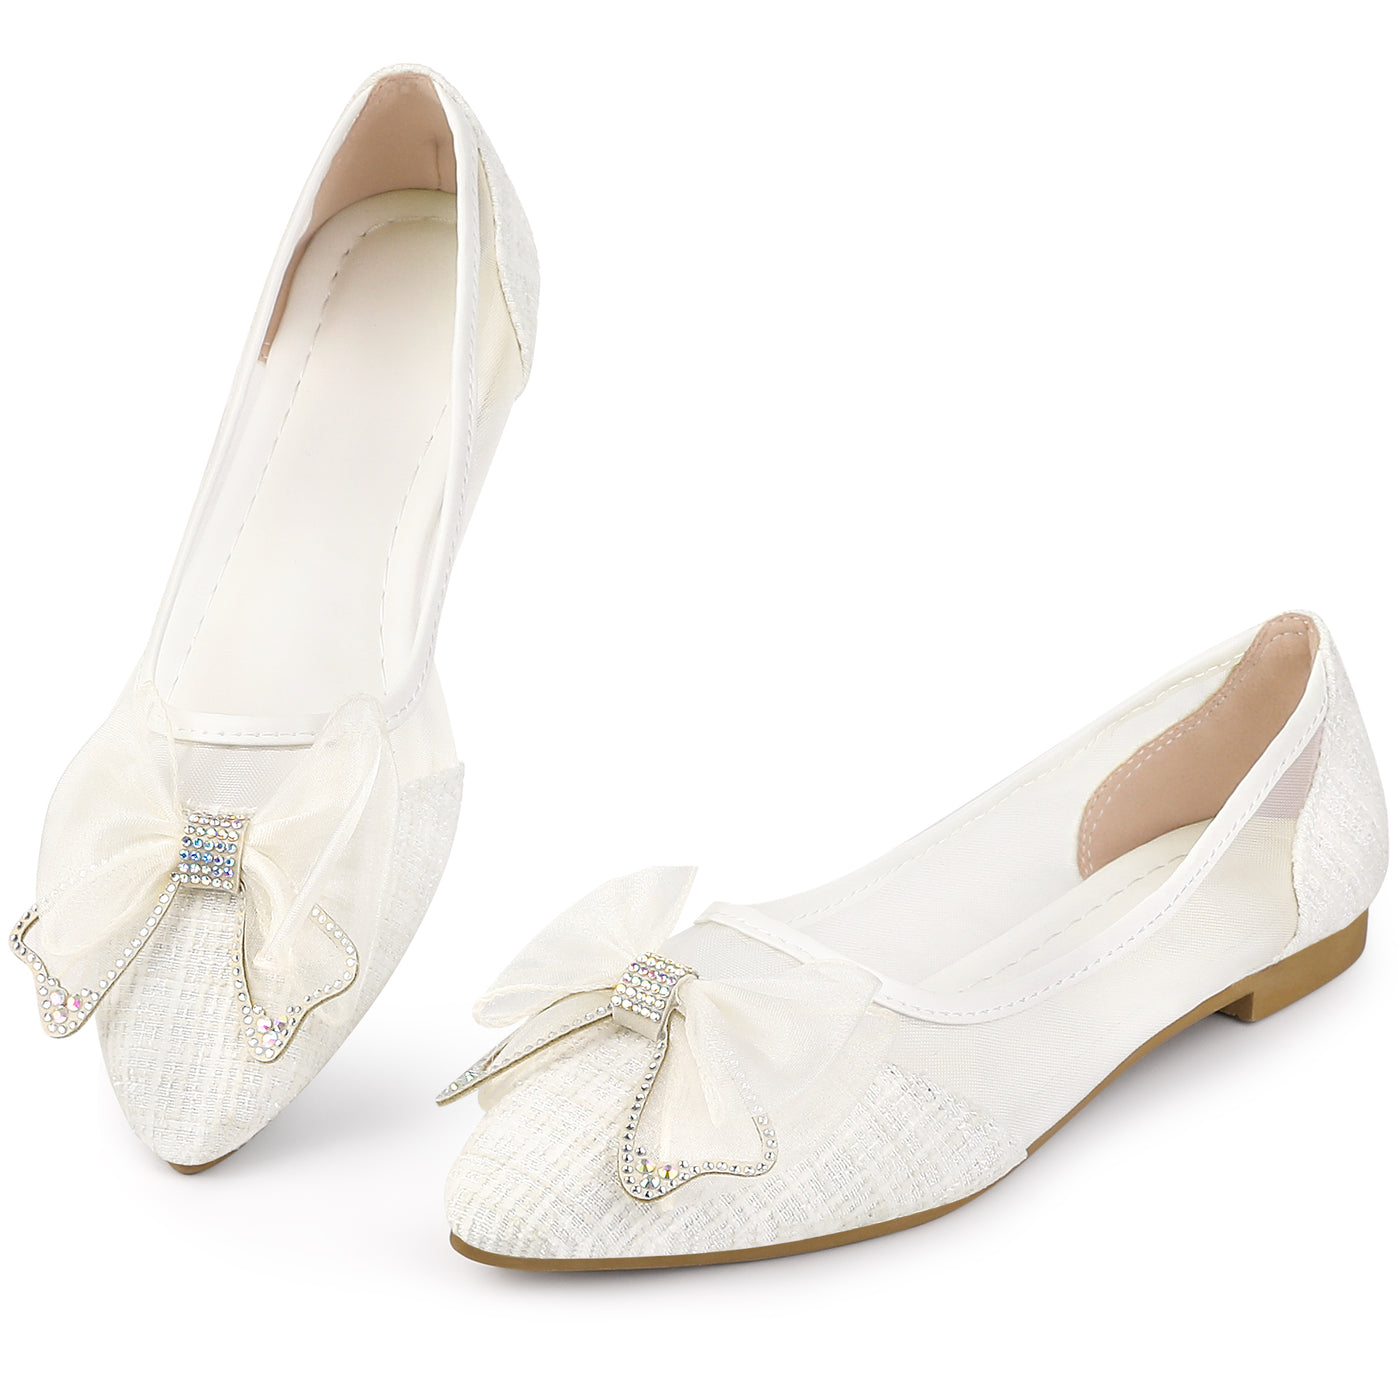 Allegra K Women's Pointed Toe Rhinestone Bow Slip on Mesh Ballet Flats